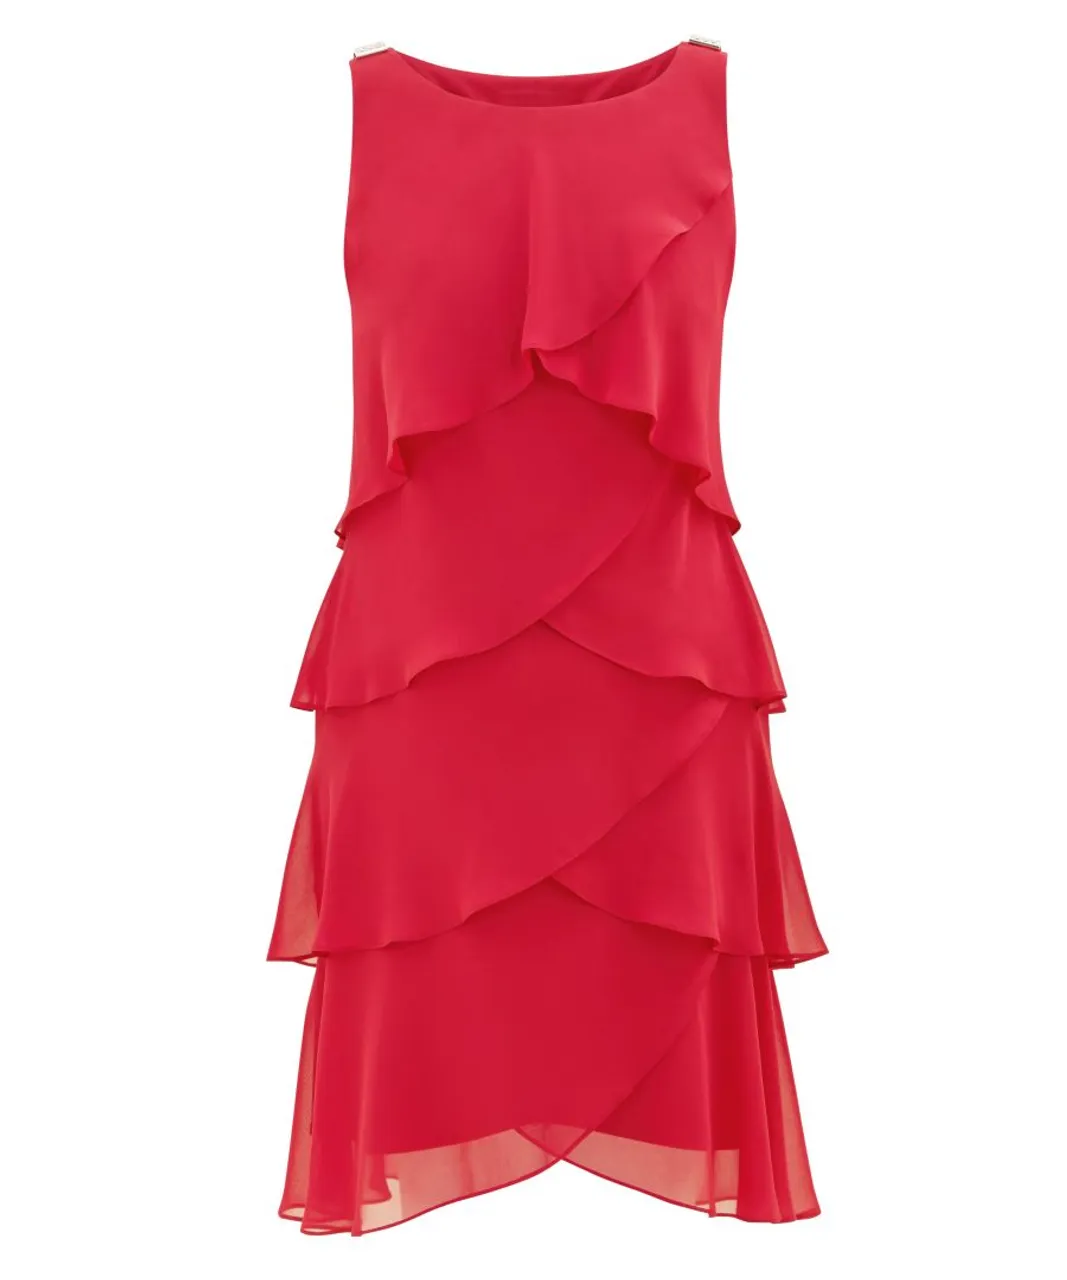 Gina Bacconi Womens Vesta Jewel-Shoulder Tiered Cocktail Dress - Red